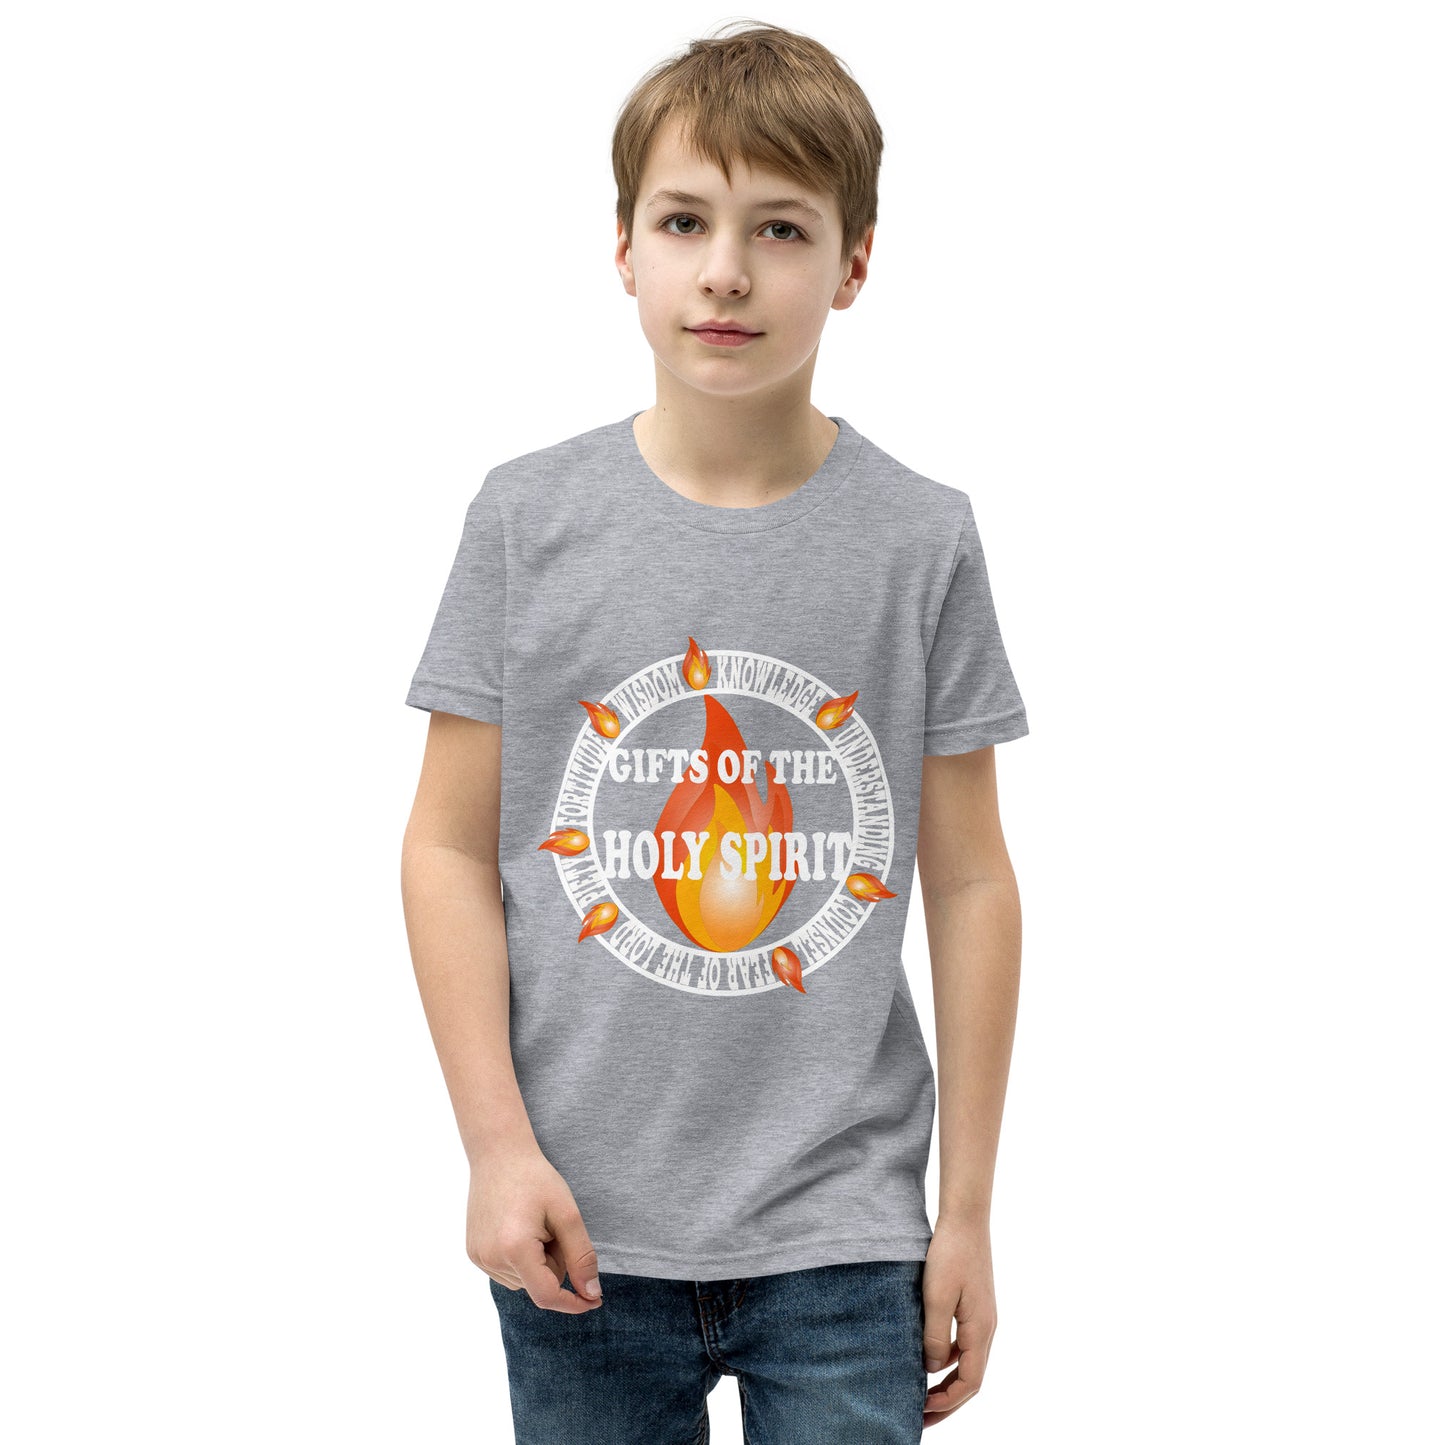 Gifts of the Holy Spirit Children's Christian t-Shirt